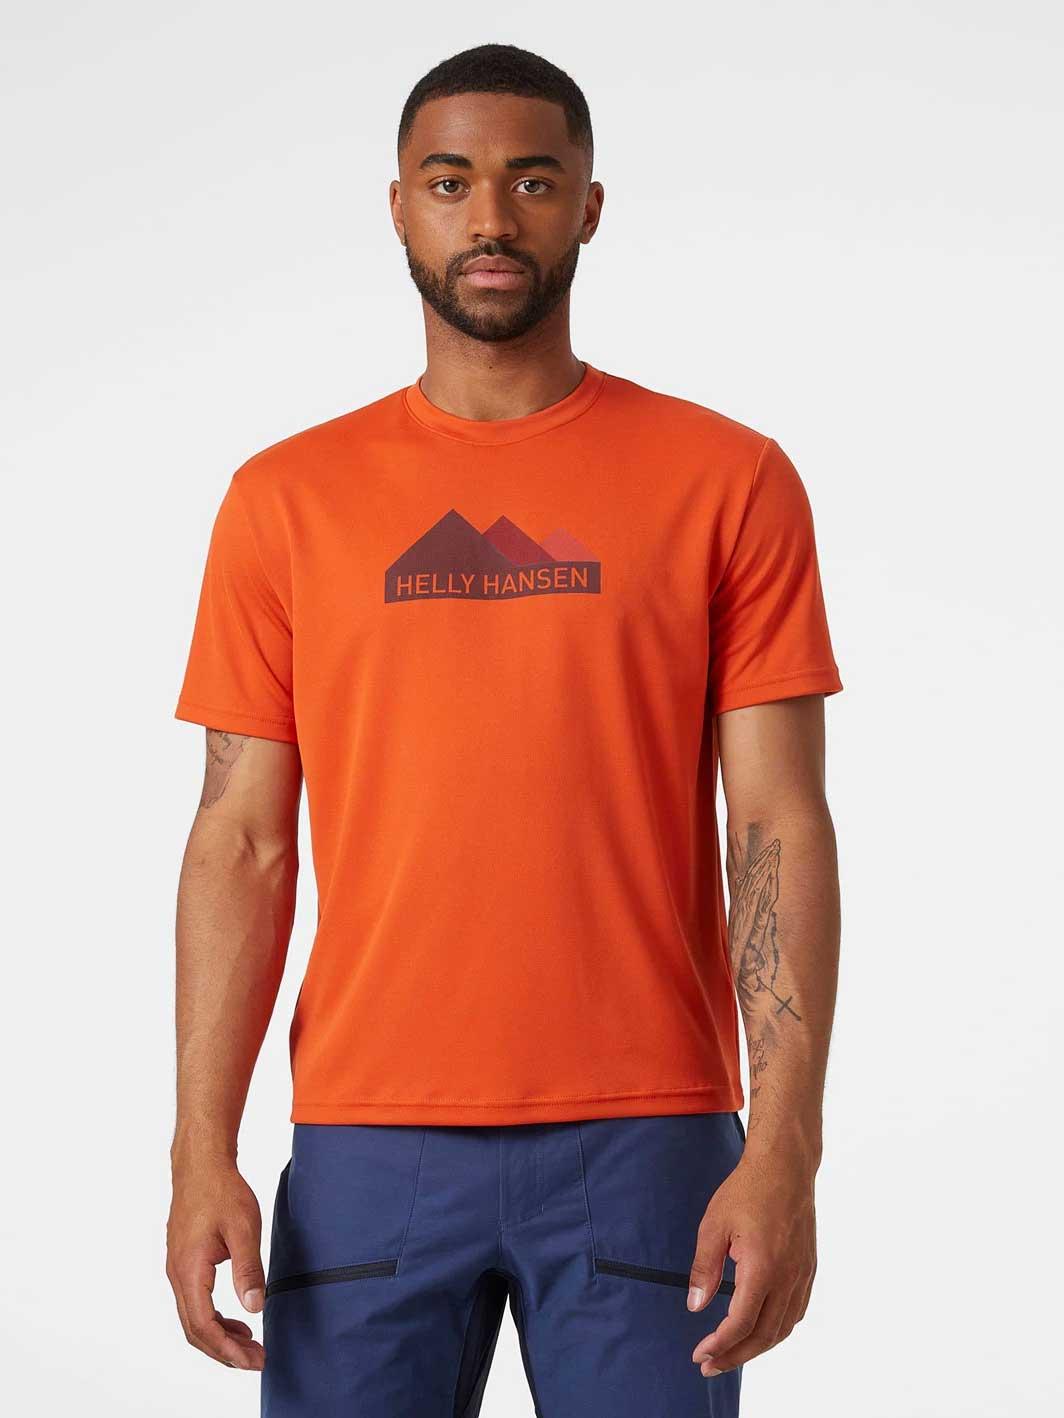 Selected image for HELLY HANSEN Muška majica HH TECH GRAPHIC T-shirt narandžasta